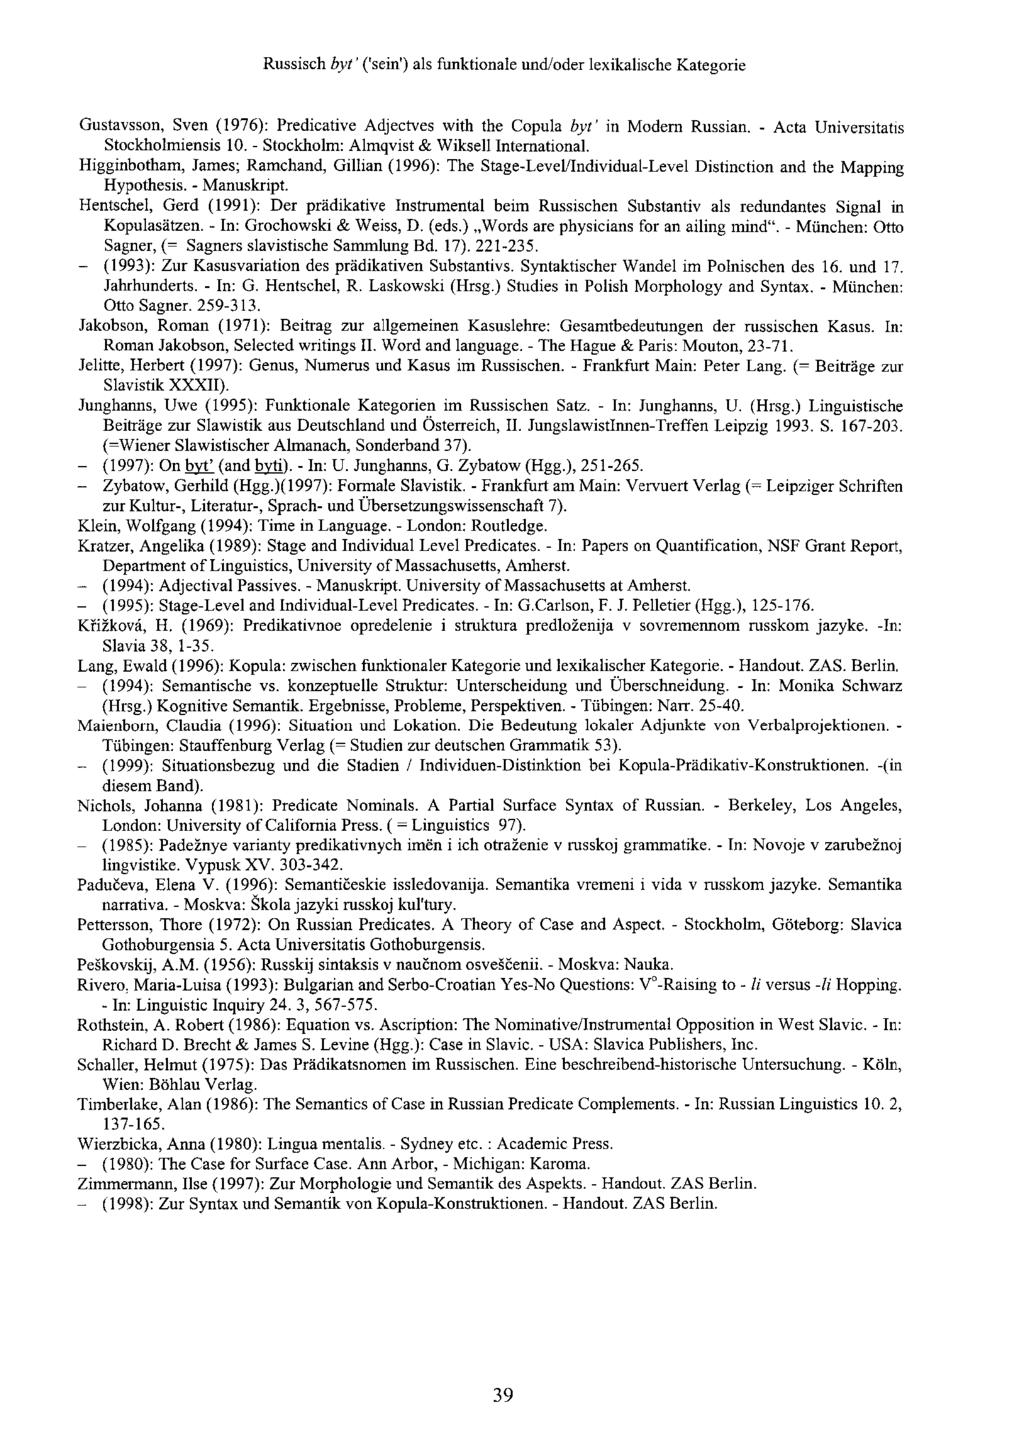 Russisch byt' ('sein') als funktionale nndloder lexikalische Kategorie Gustavsson, Sven (1976): Predicative Adjectves wifli the Copula byt' in Modern Russian. - Acta Universitatls Stockholmiensis 10.